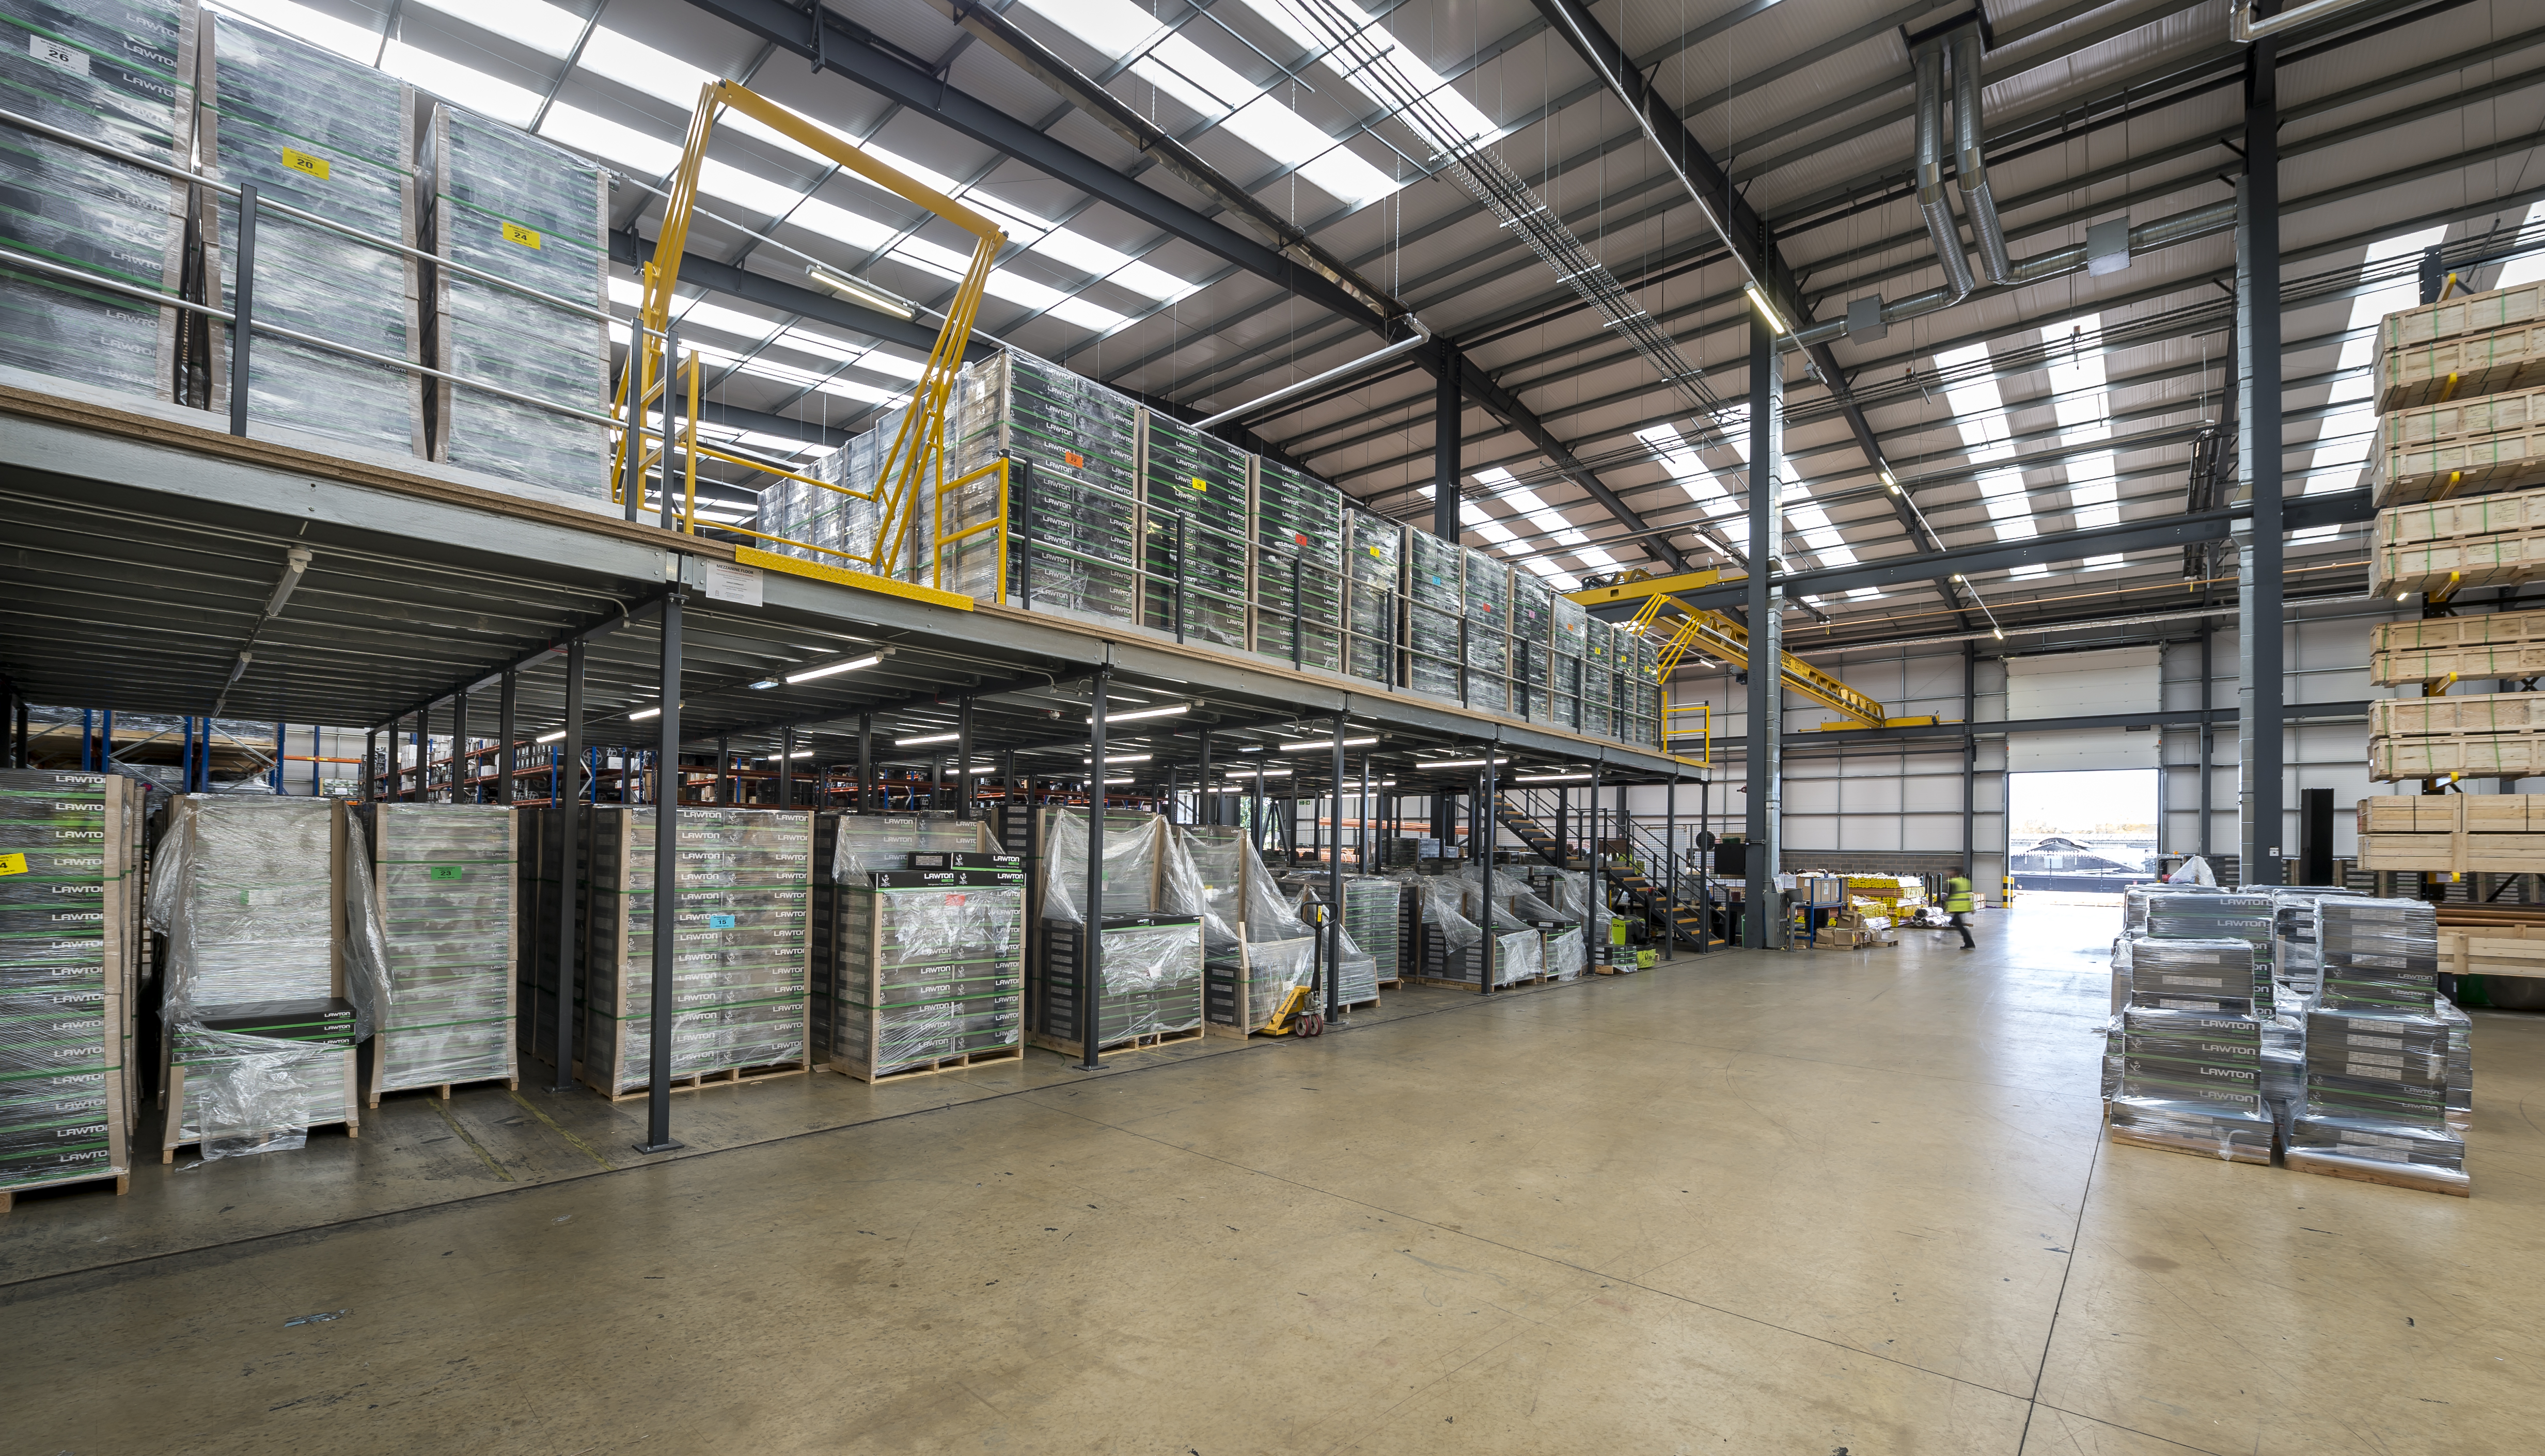 Mezzanine Floors from Warehouse Storage Solutions